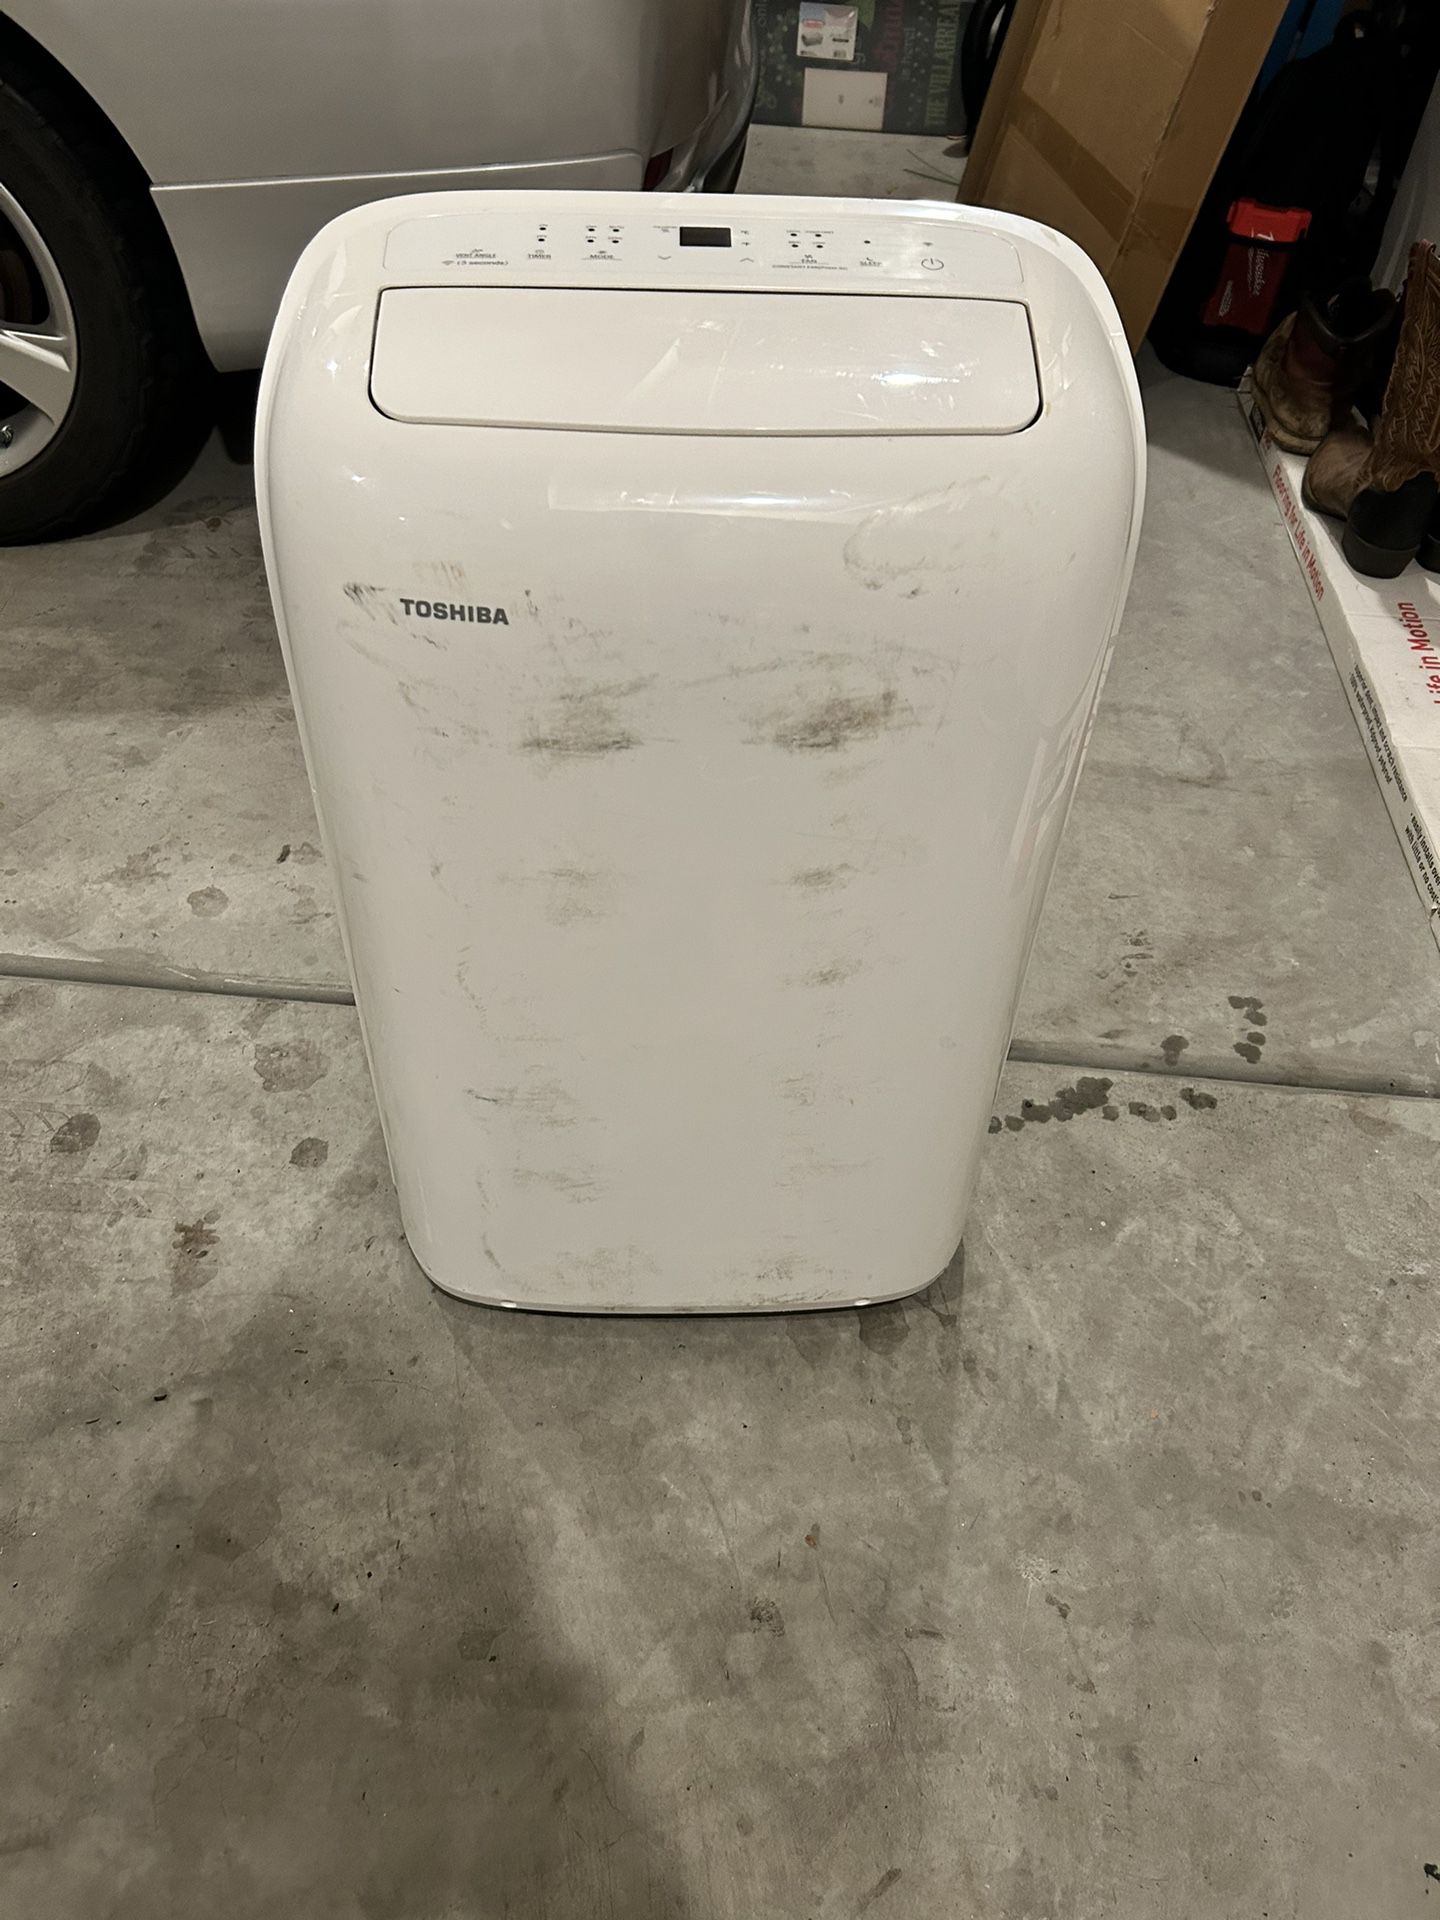 Portable Air Conditioner/Heater